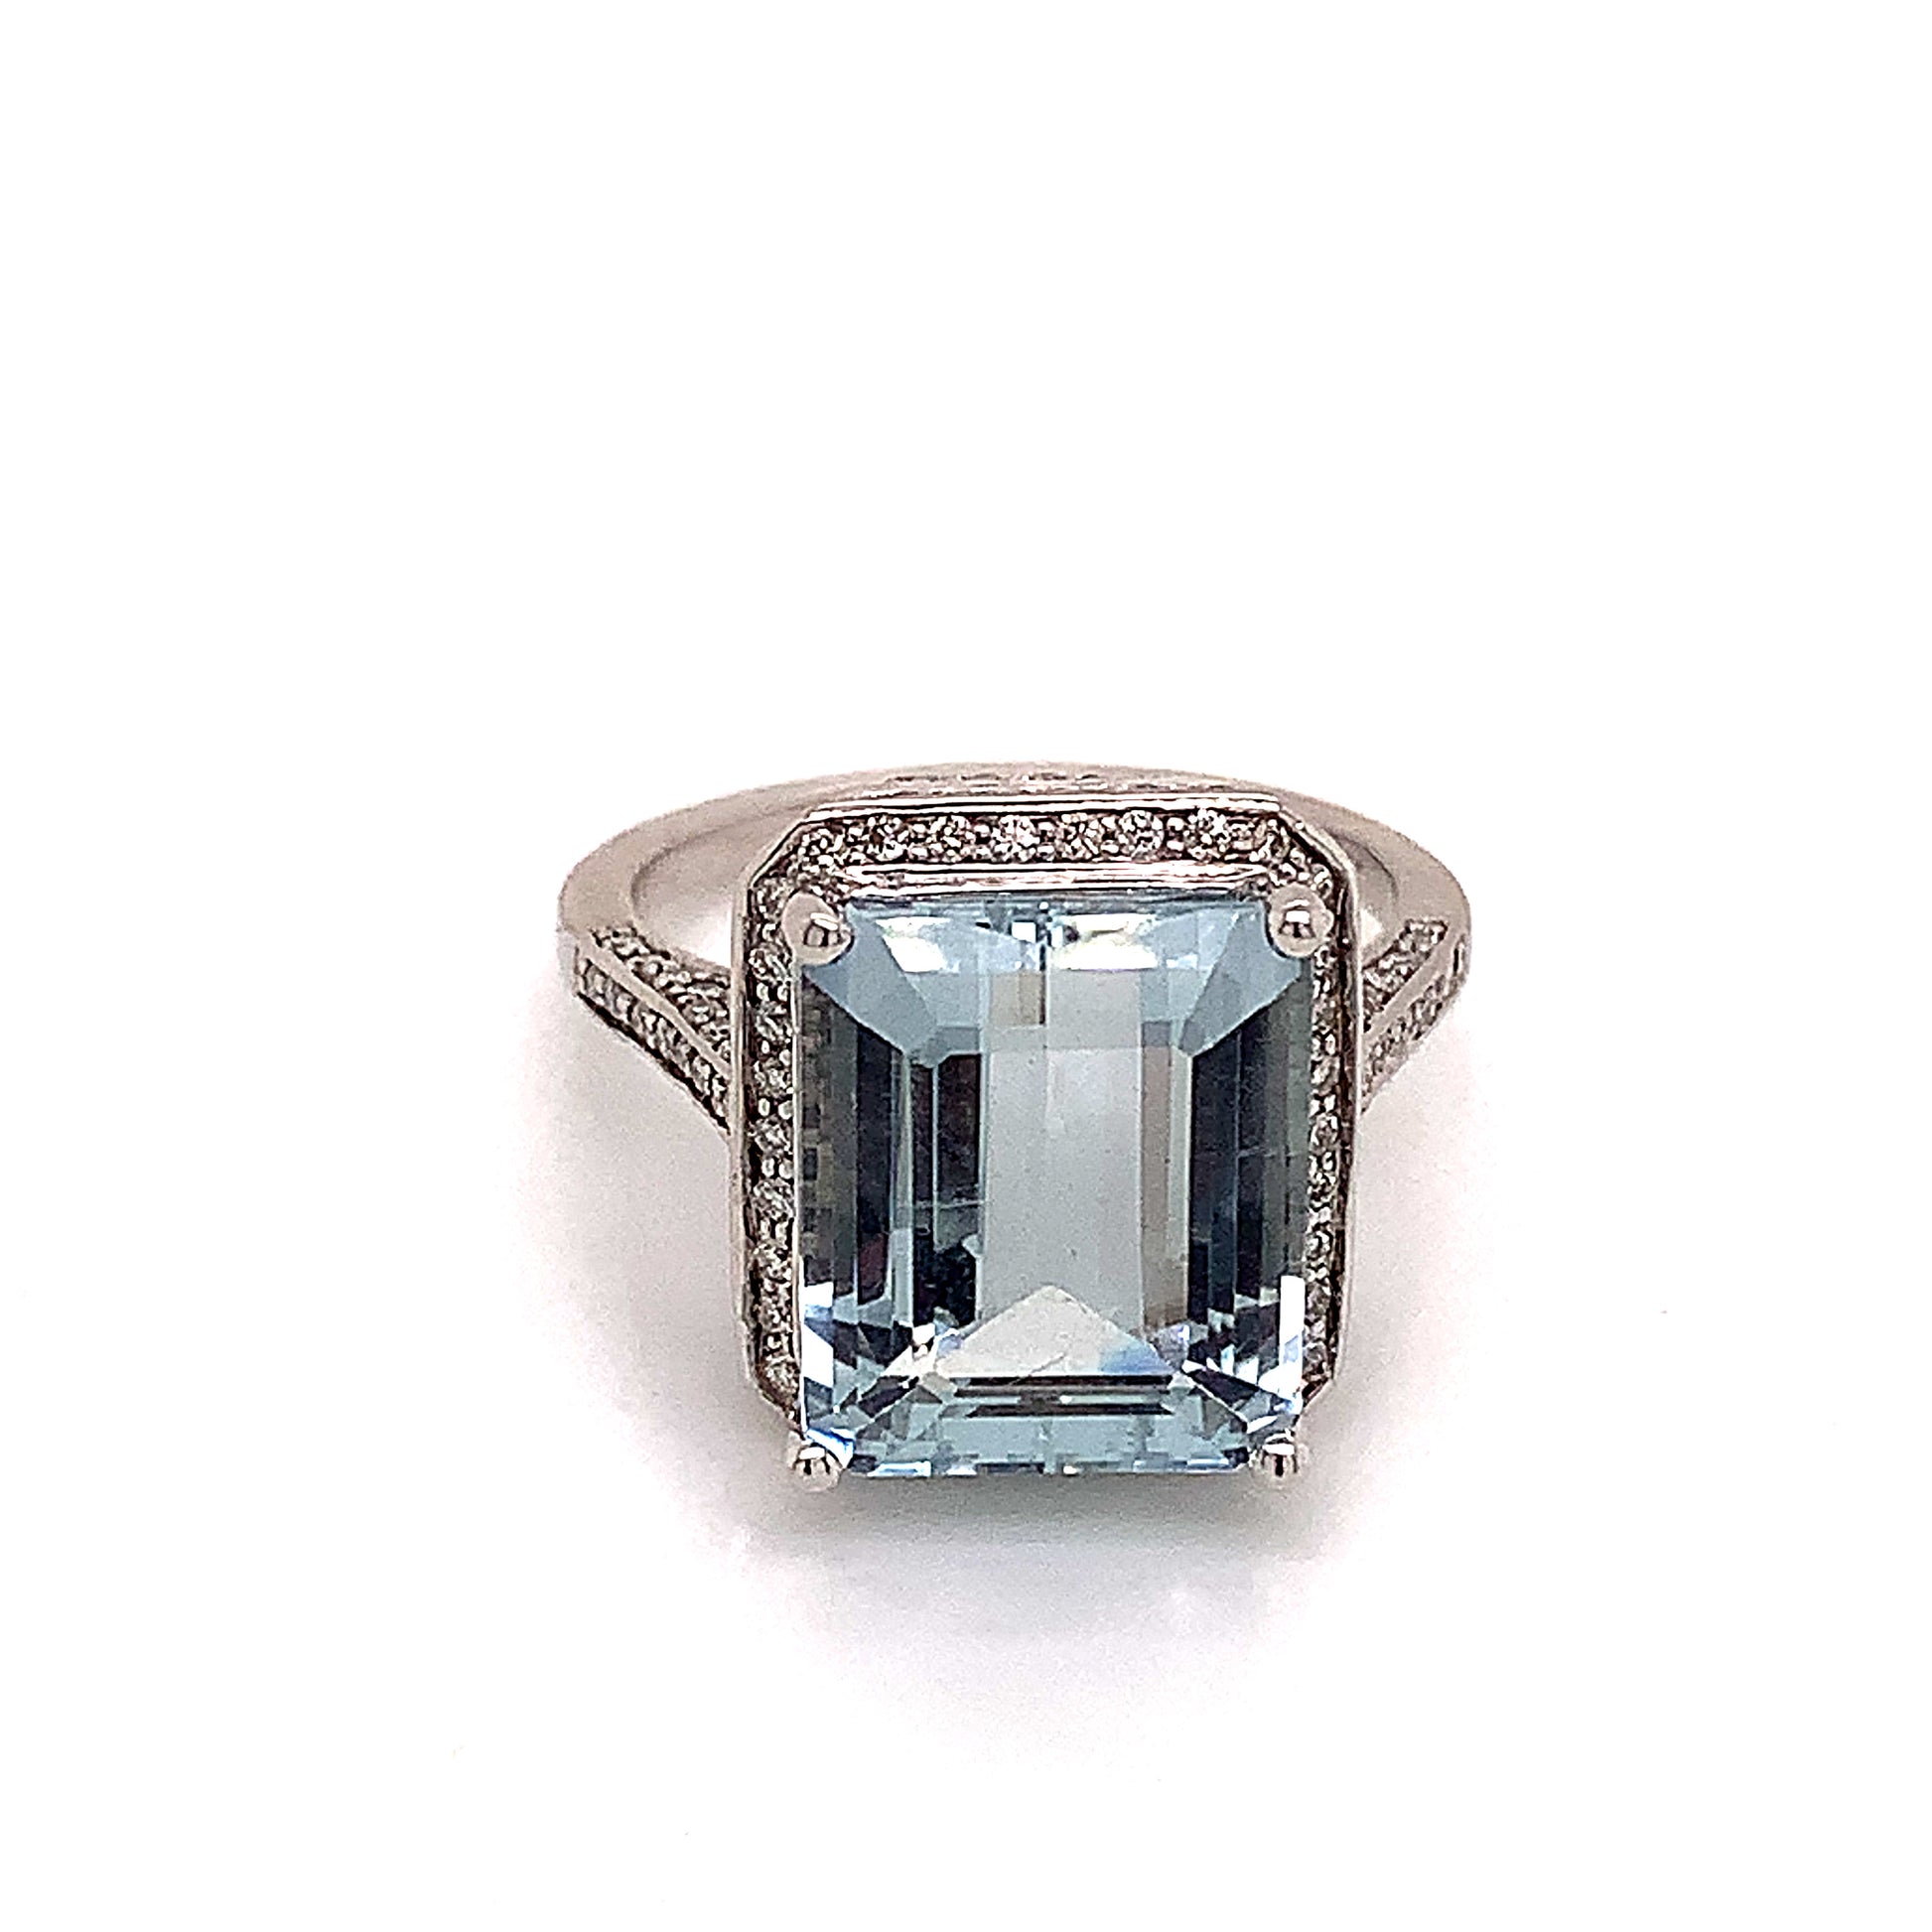 Diamond Aquamarine Ring Size 6.75 14k Gold 6.25 TCW Certified $5,950 120671 - Certified Estate Jewelry